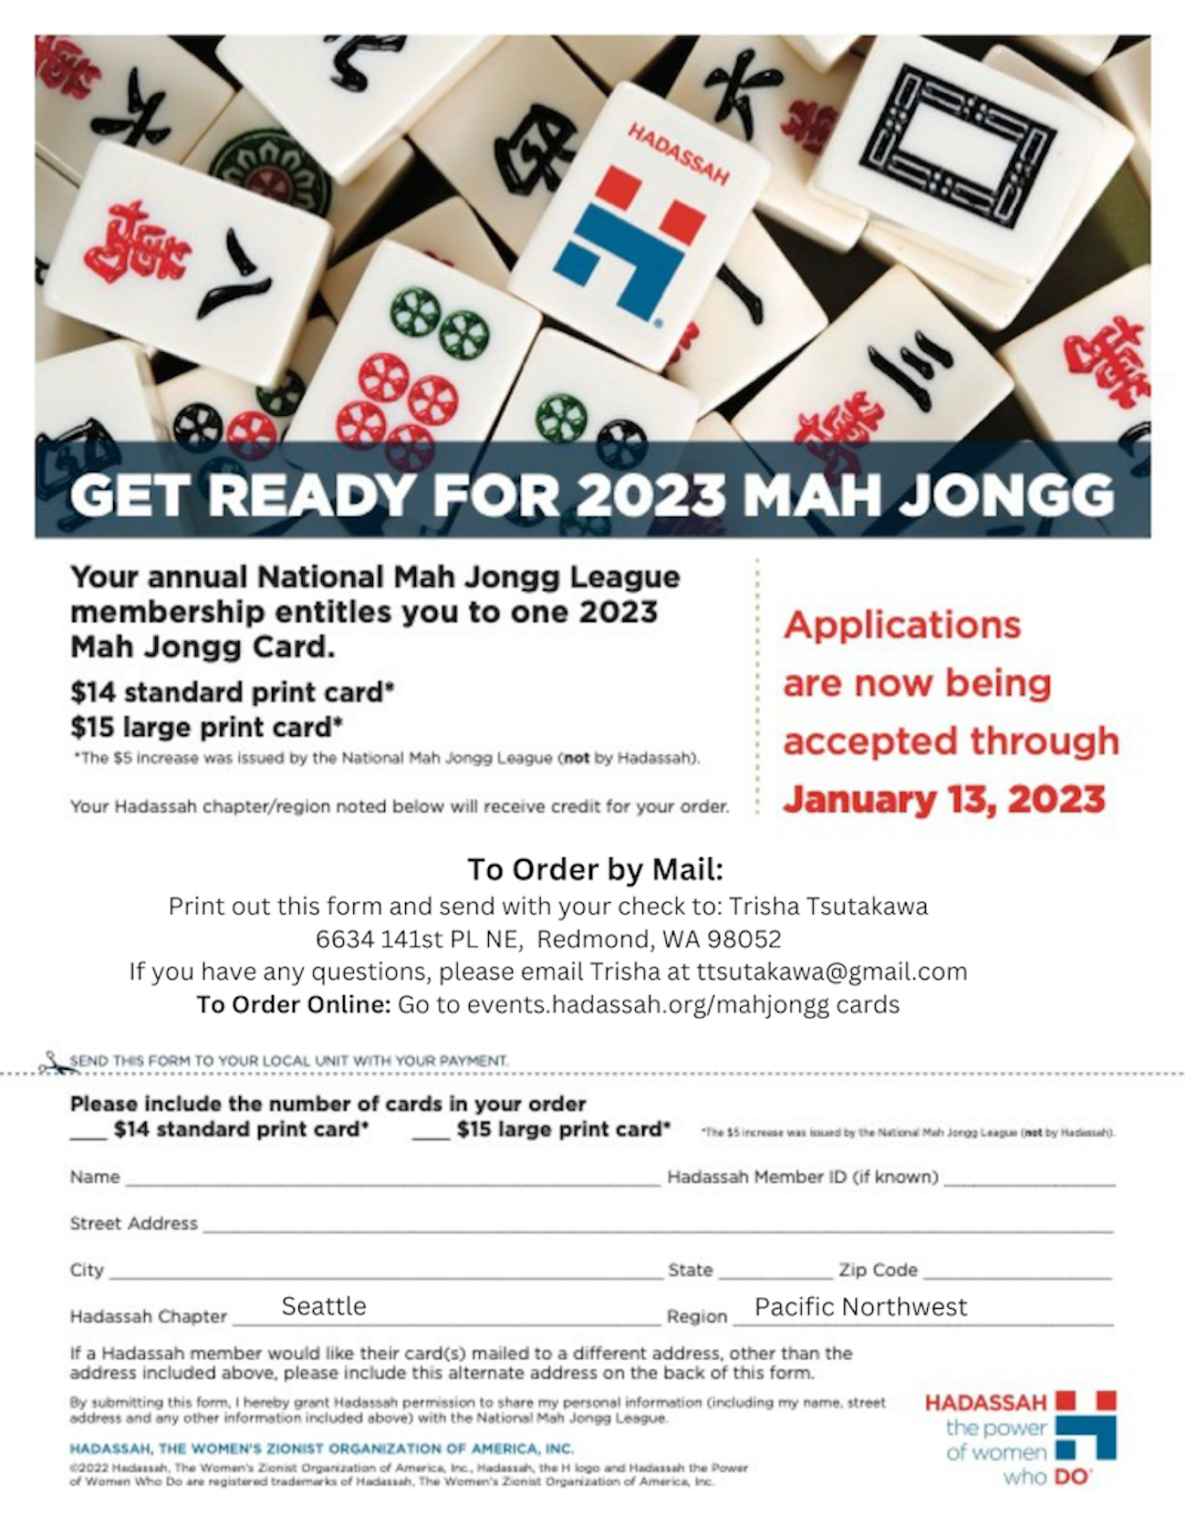 Get your 2023 Mah Jongg Card and Support Hadassah! Seattle Hadassah